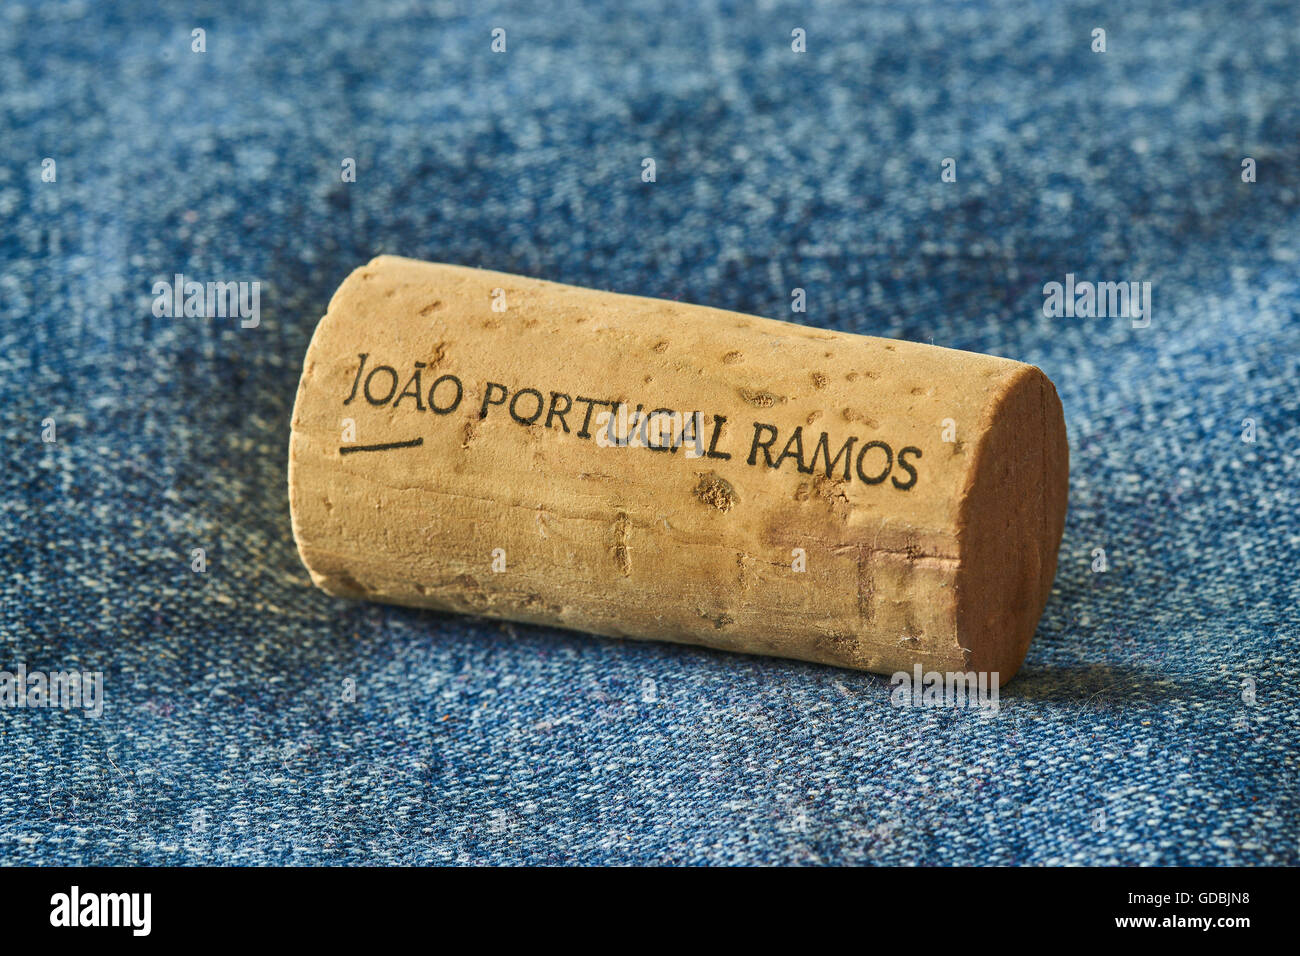 Joao Portugal Ramos Portugese wine cork stopper Stock Photo